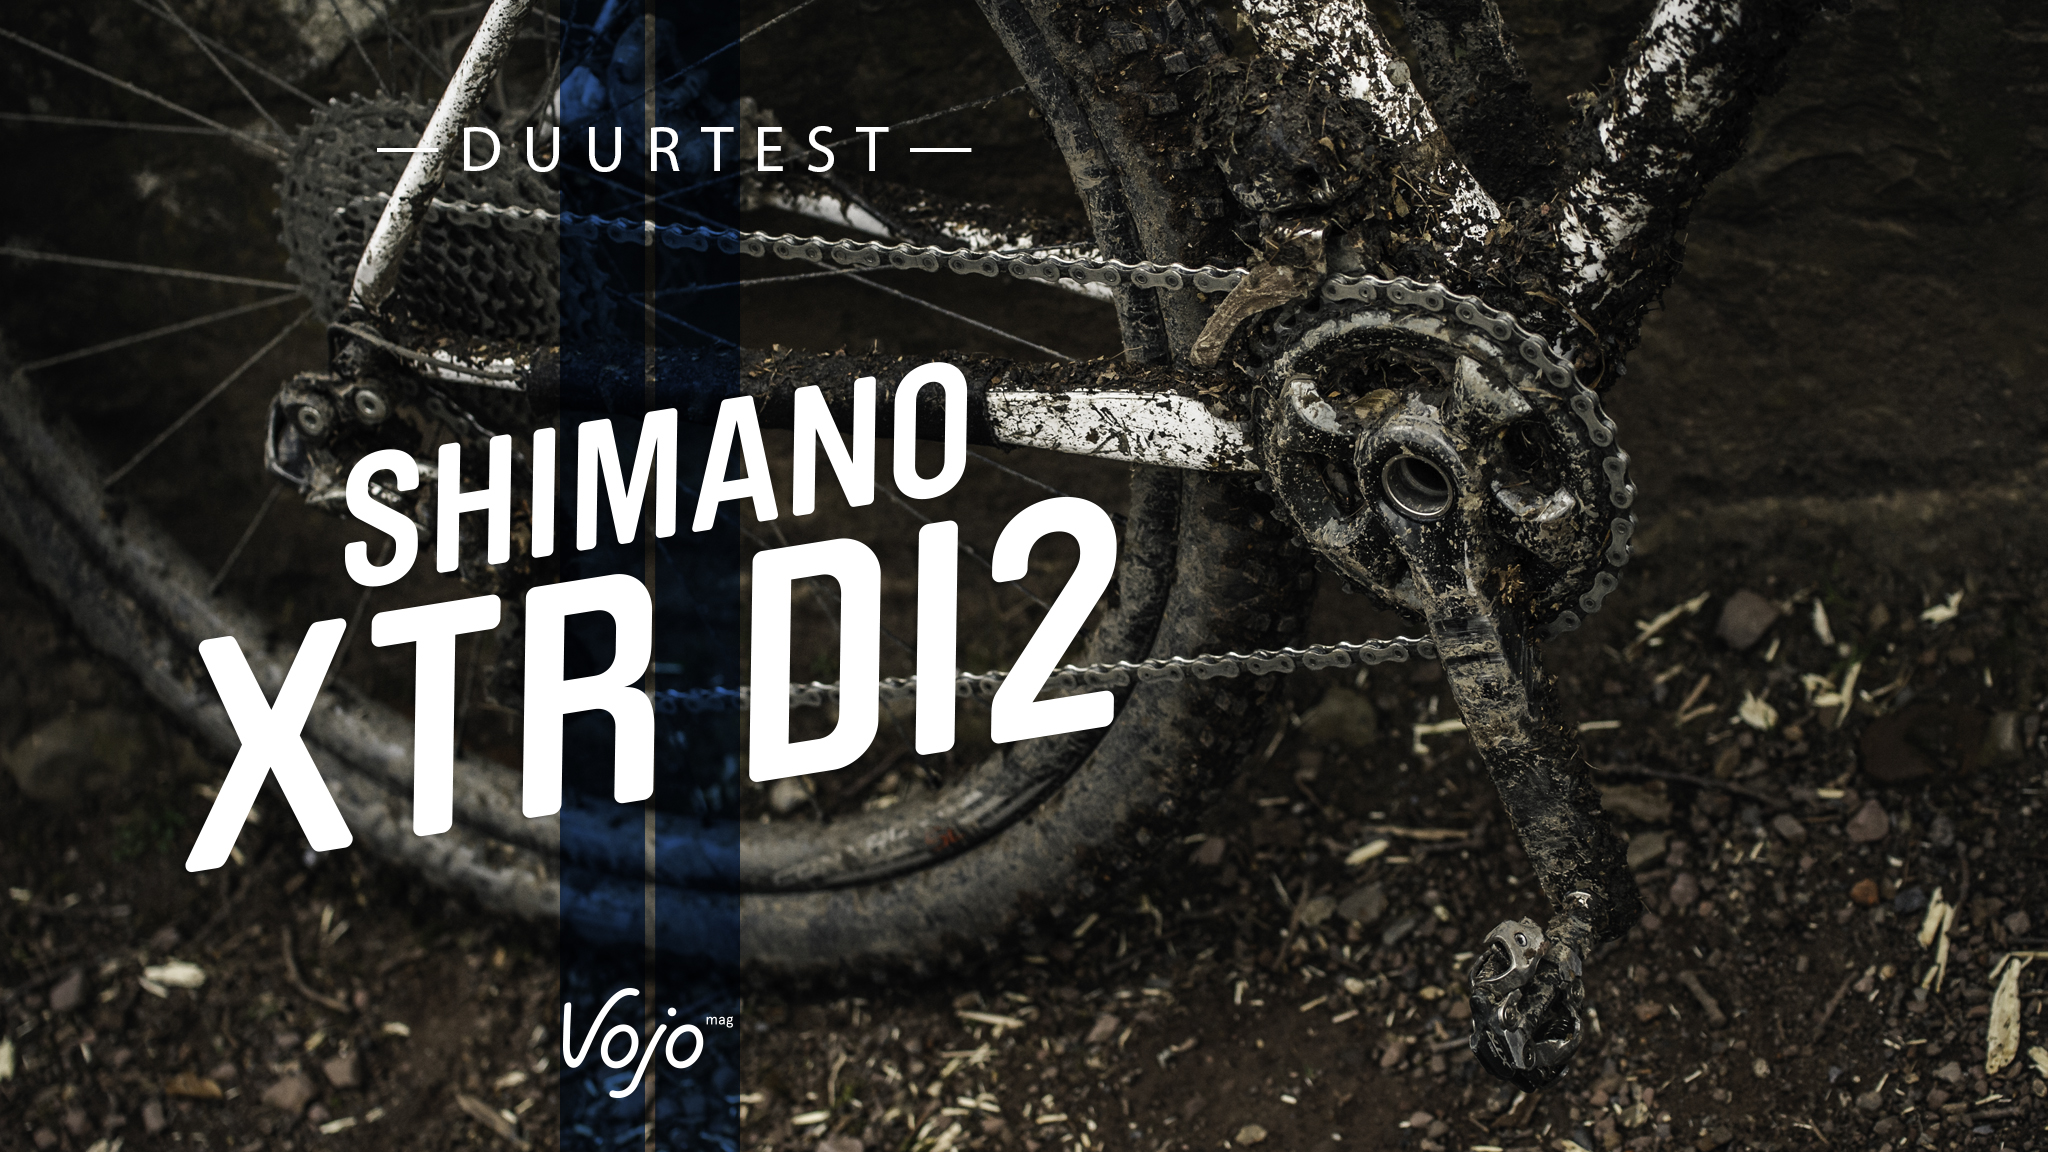 Duurtest: 1500 kilometer met de Shimano XTR Di2